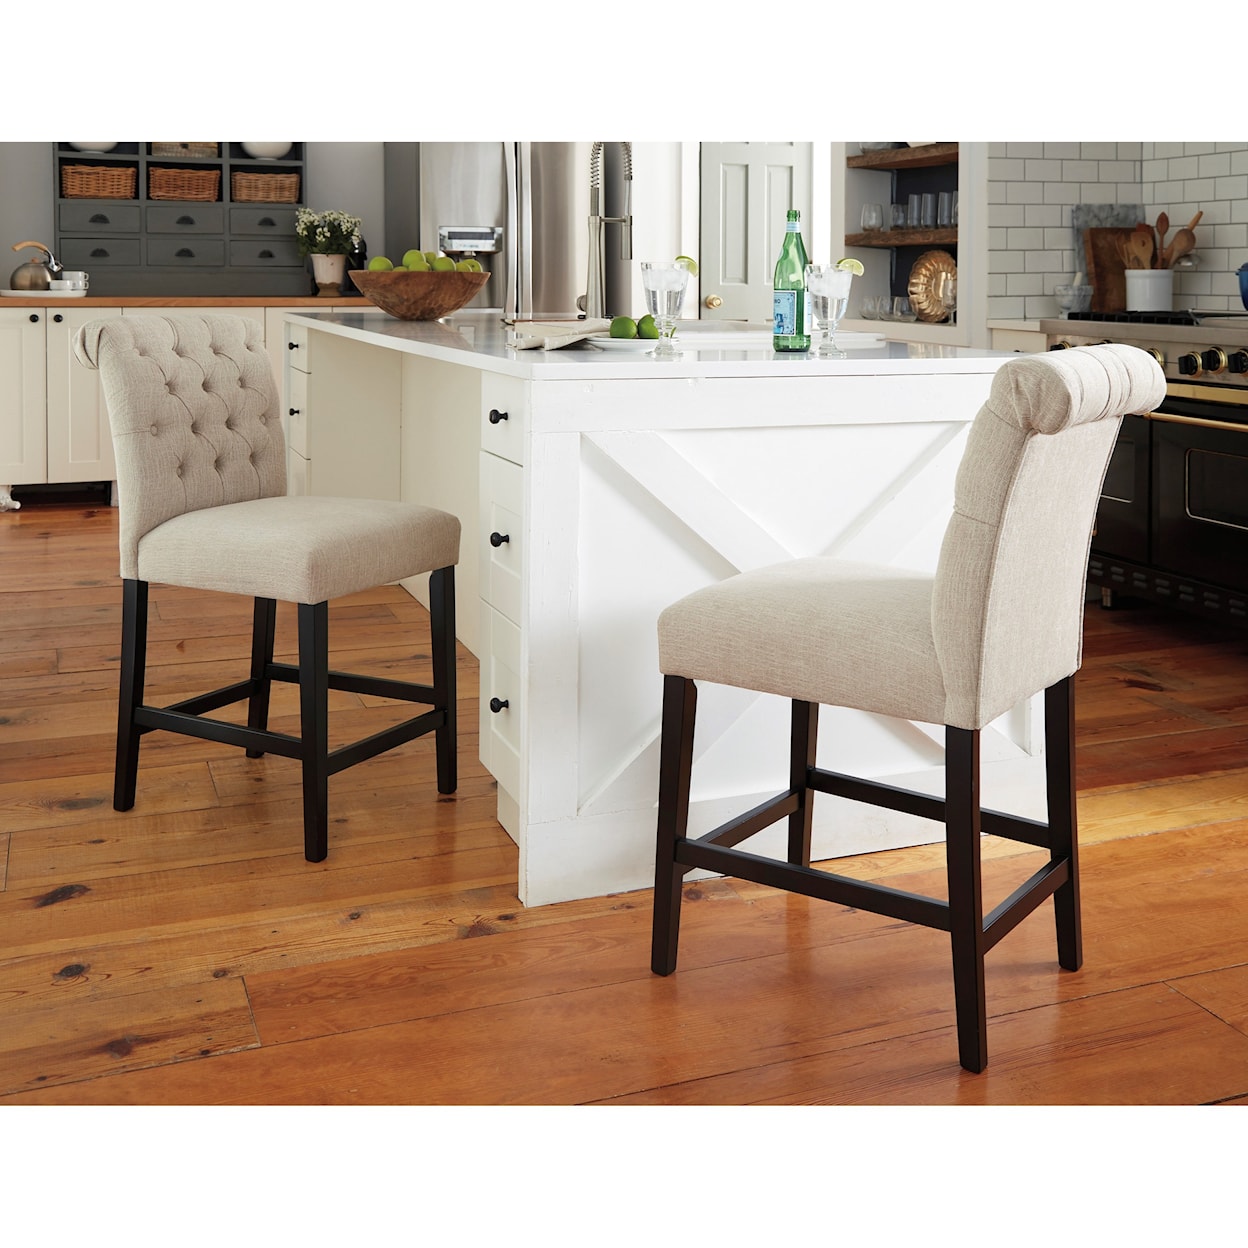 Ashley Furniture Signature Design Tripton Upholstered Barstool